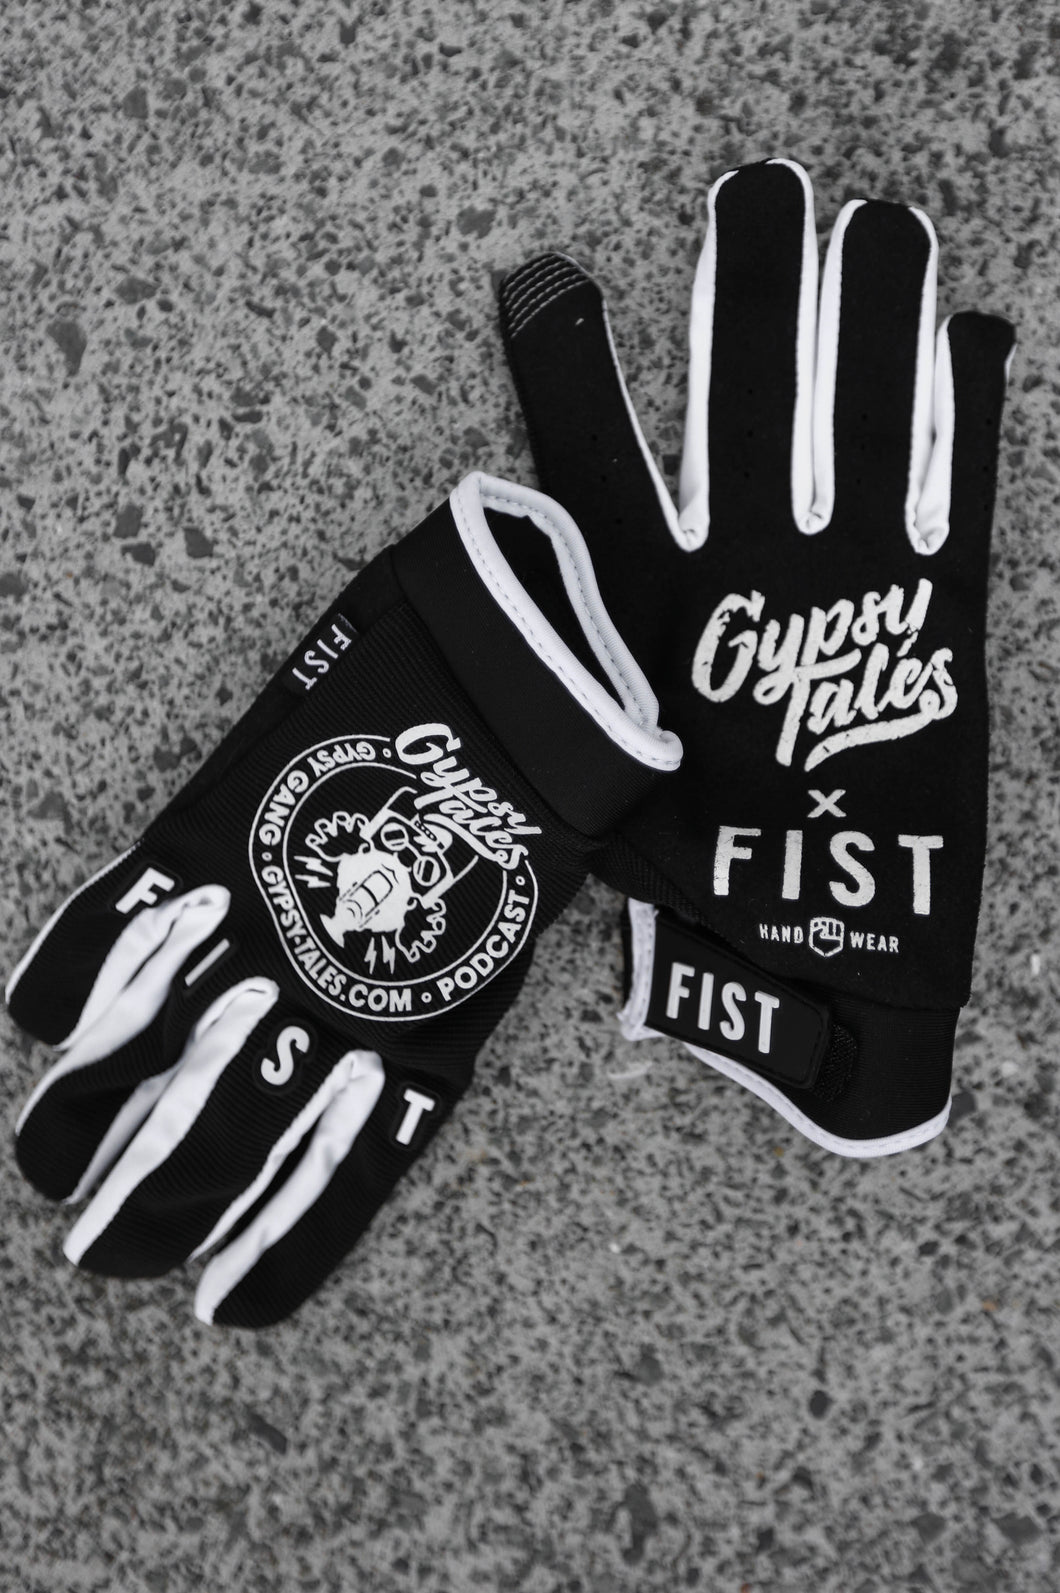 Gypsy Tales FIST Glove Colab